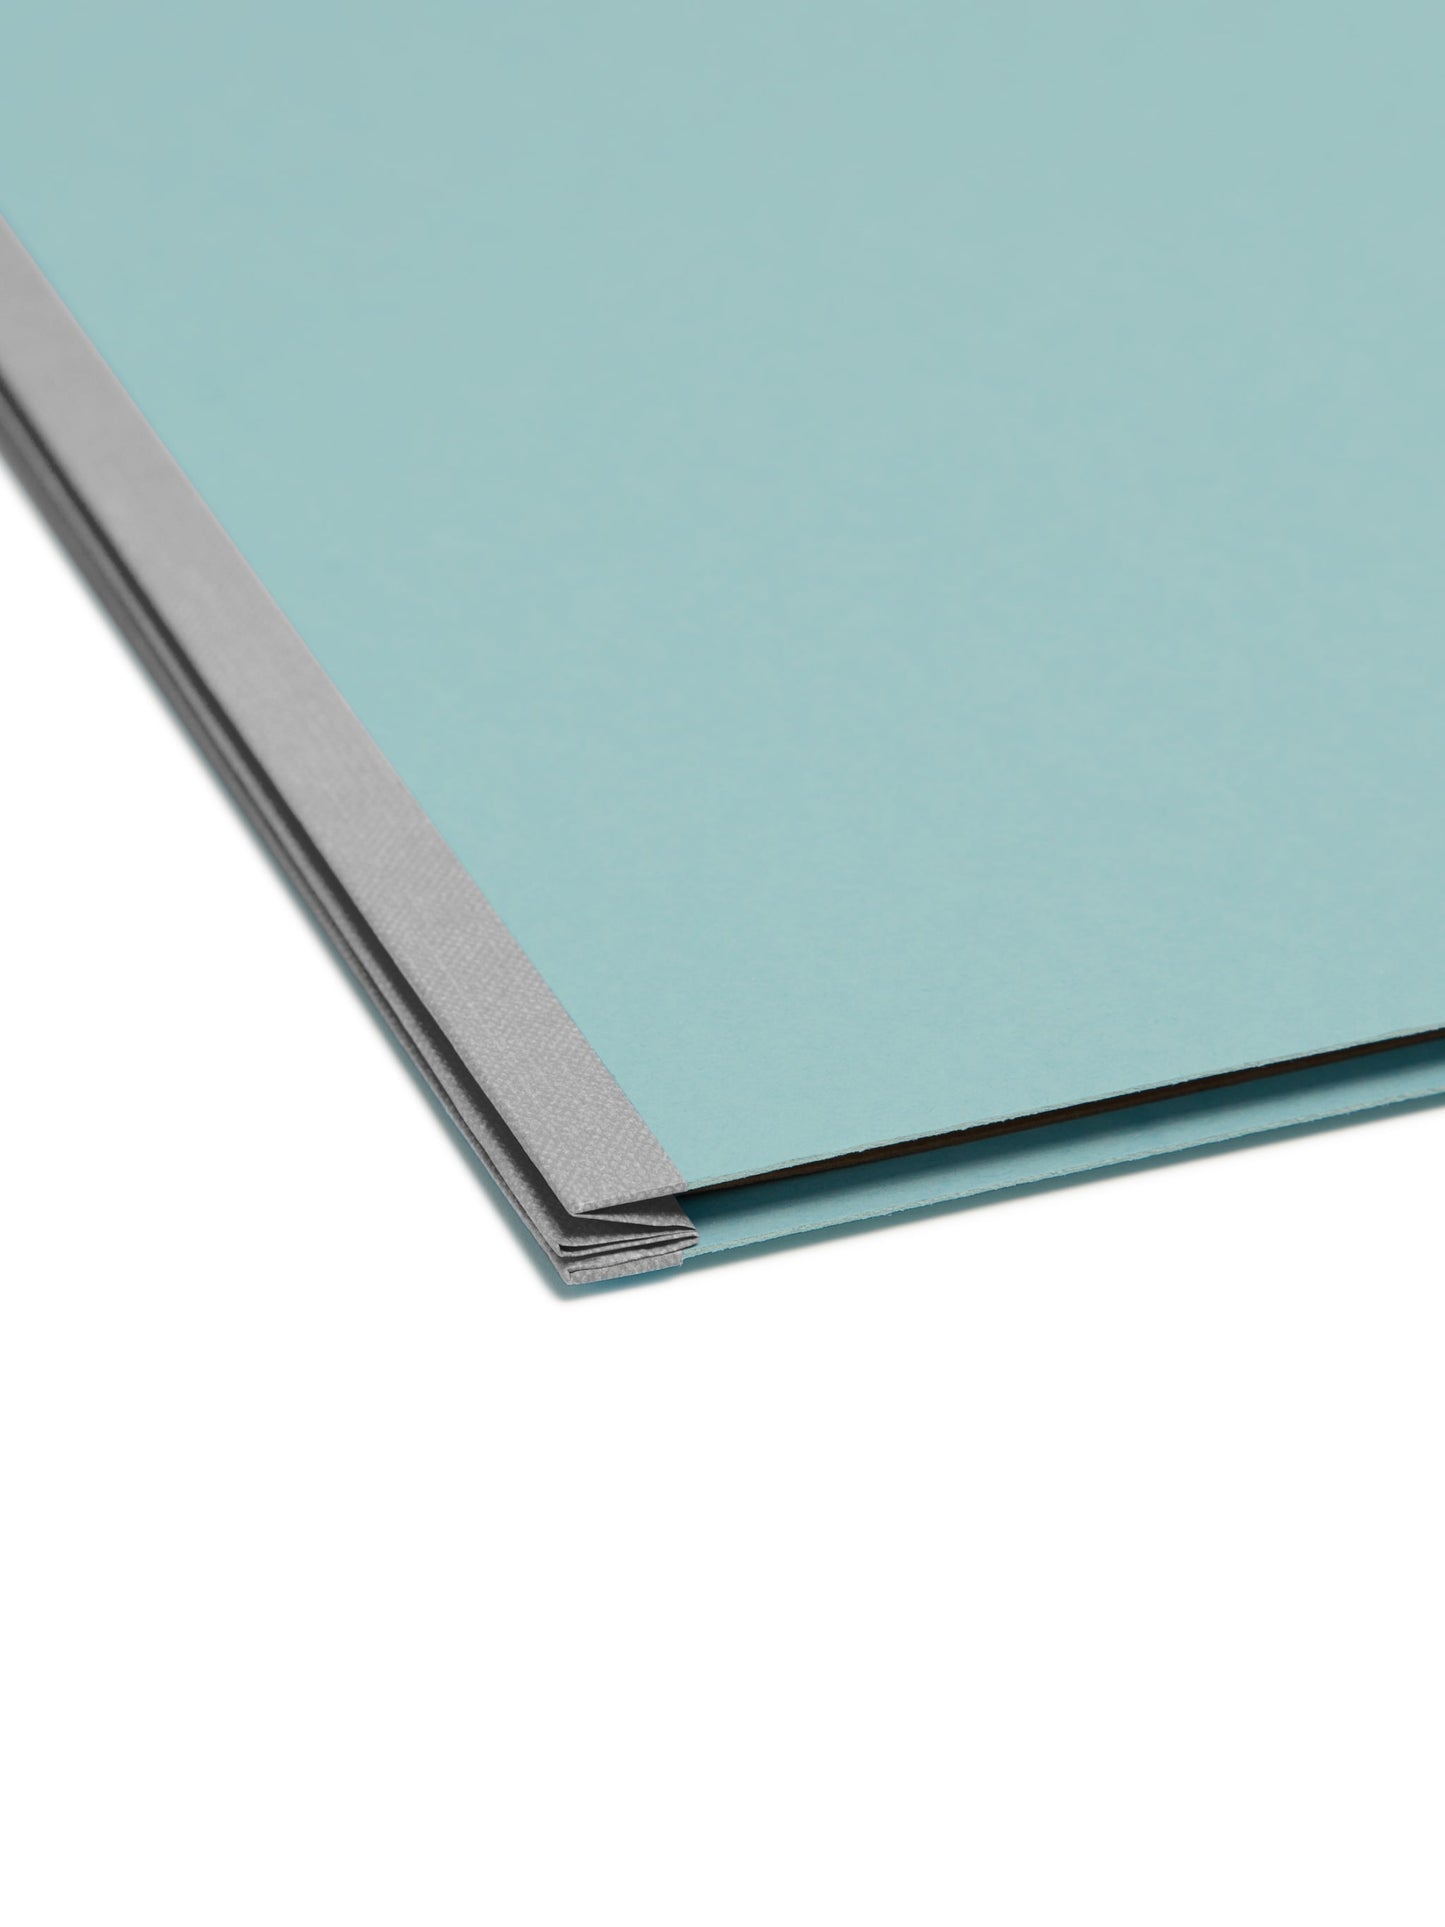 Pressboard Classification File Folders, 1 Divider, 2 inch Expansion, Blue Color, Legal Size, Set of 0, 30086486187214